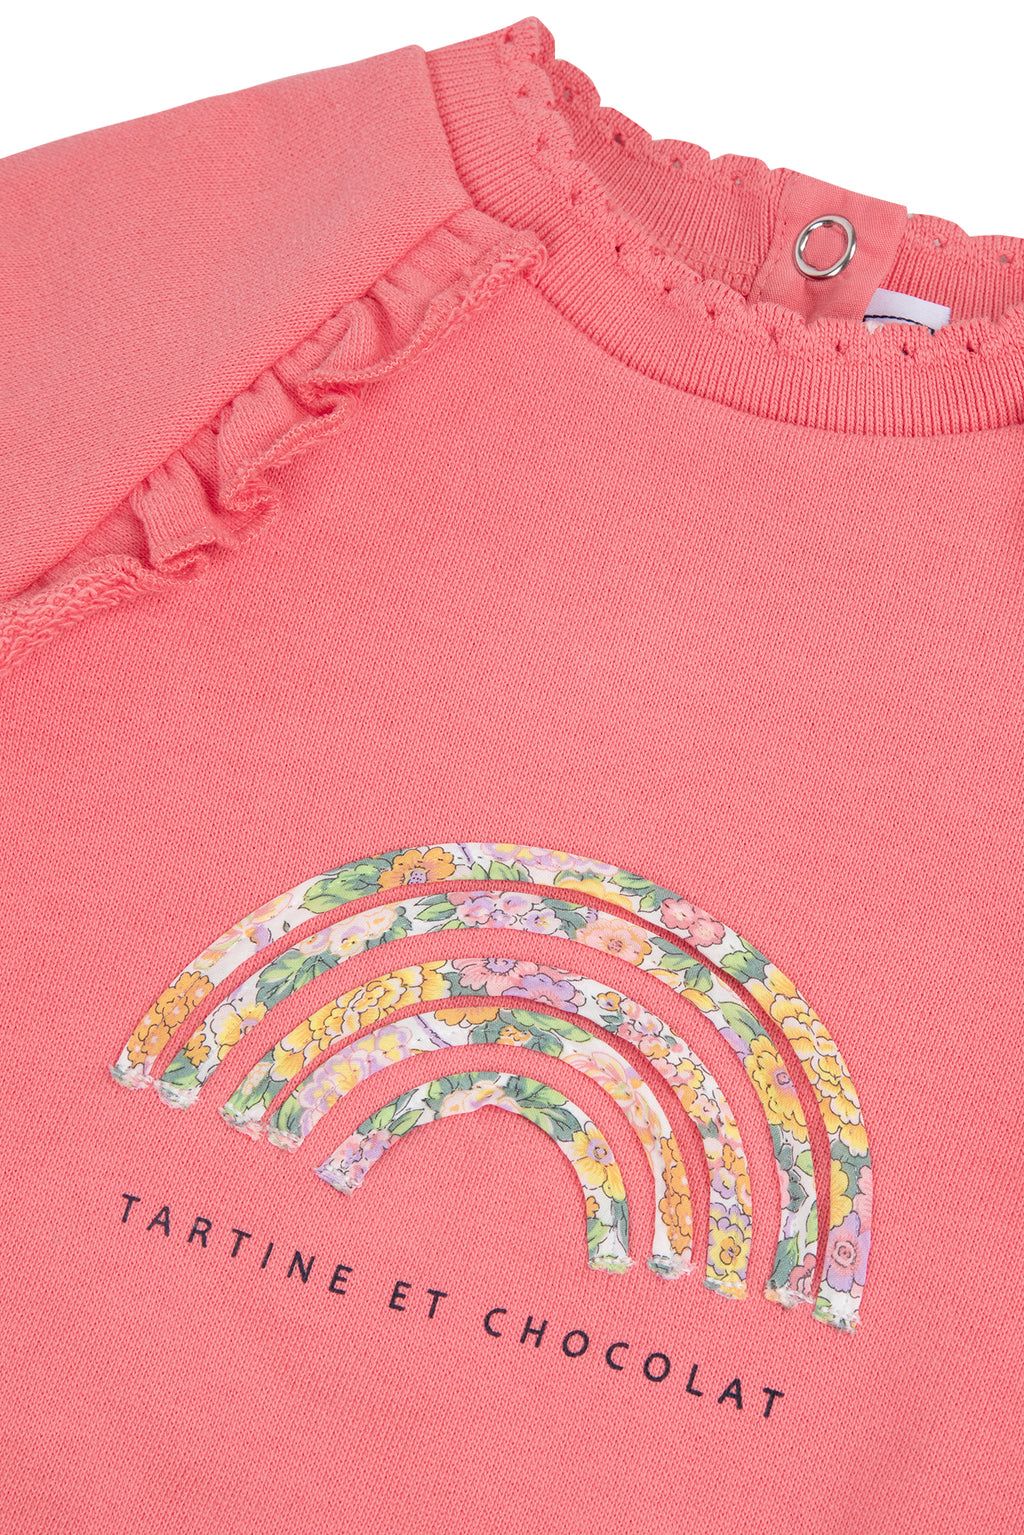 Sweatshirt - Pink Embrodery Rainbow